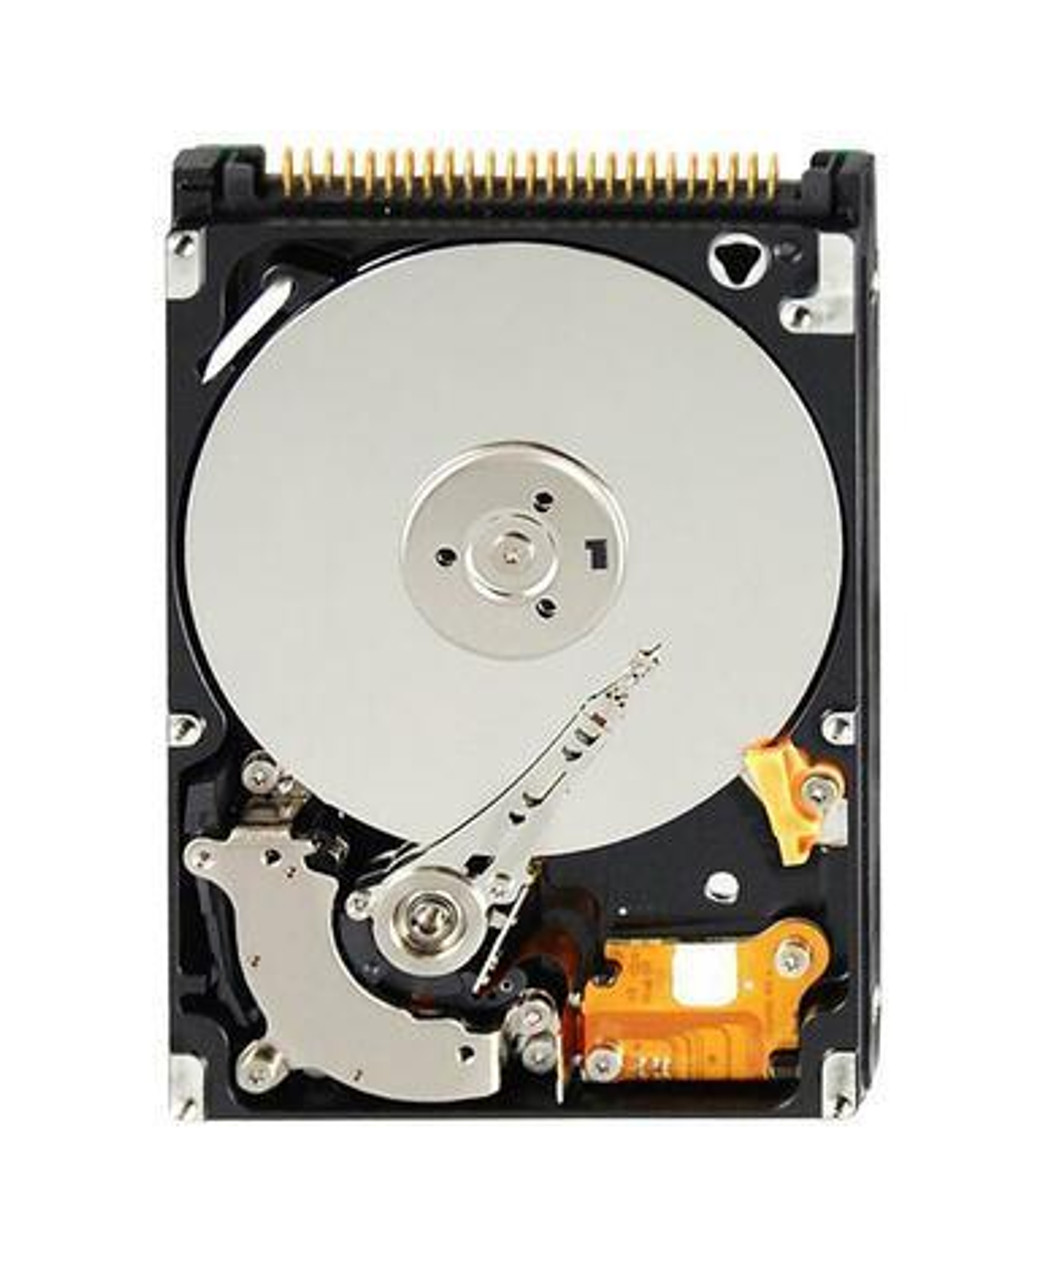 CMS Products 80GB 4200RPM ATA/IDE 2.5-inch Internal Hard Drive